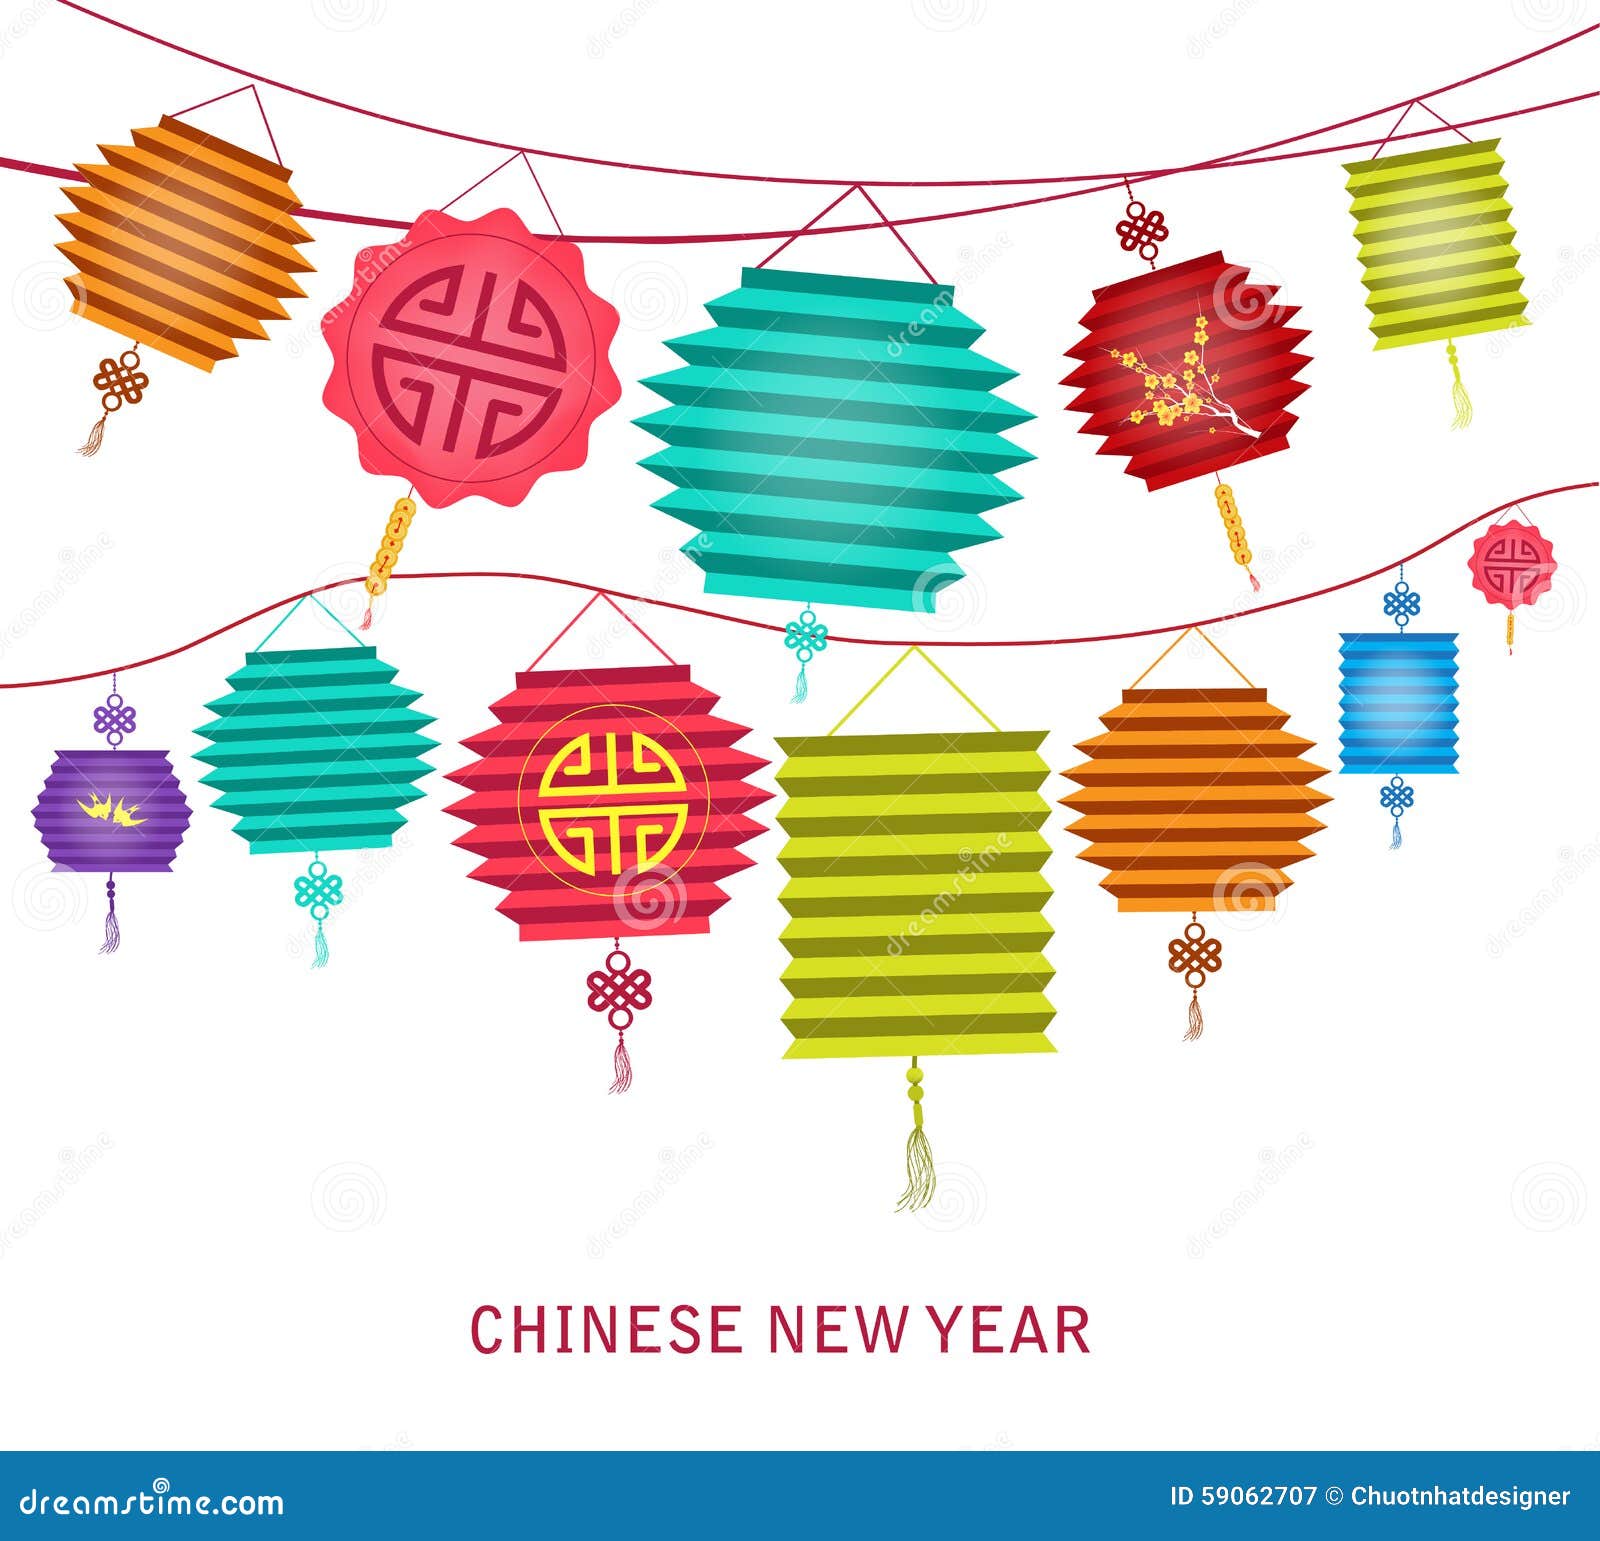 chinese new year animated clip art - photo #42